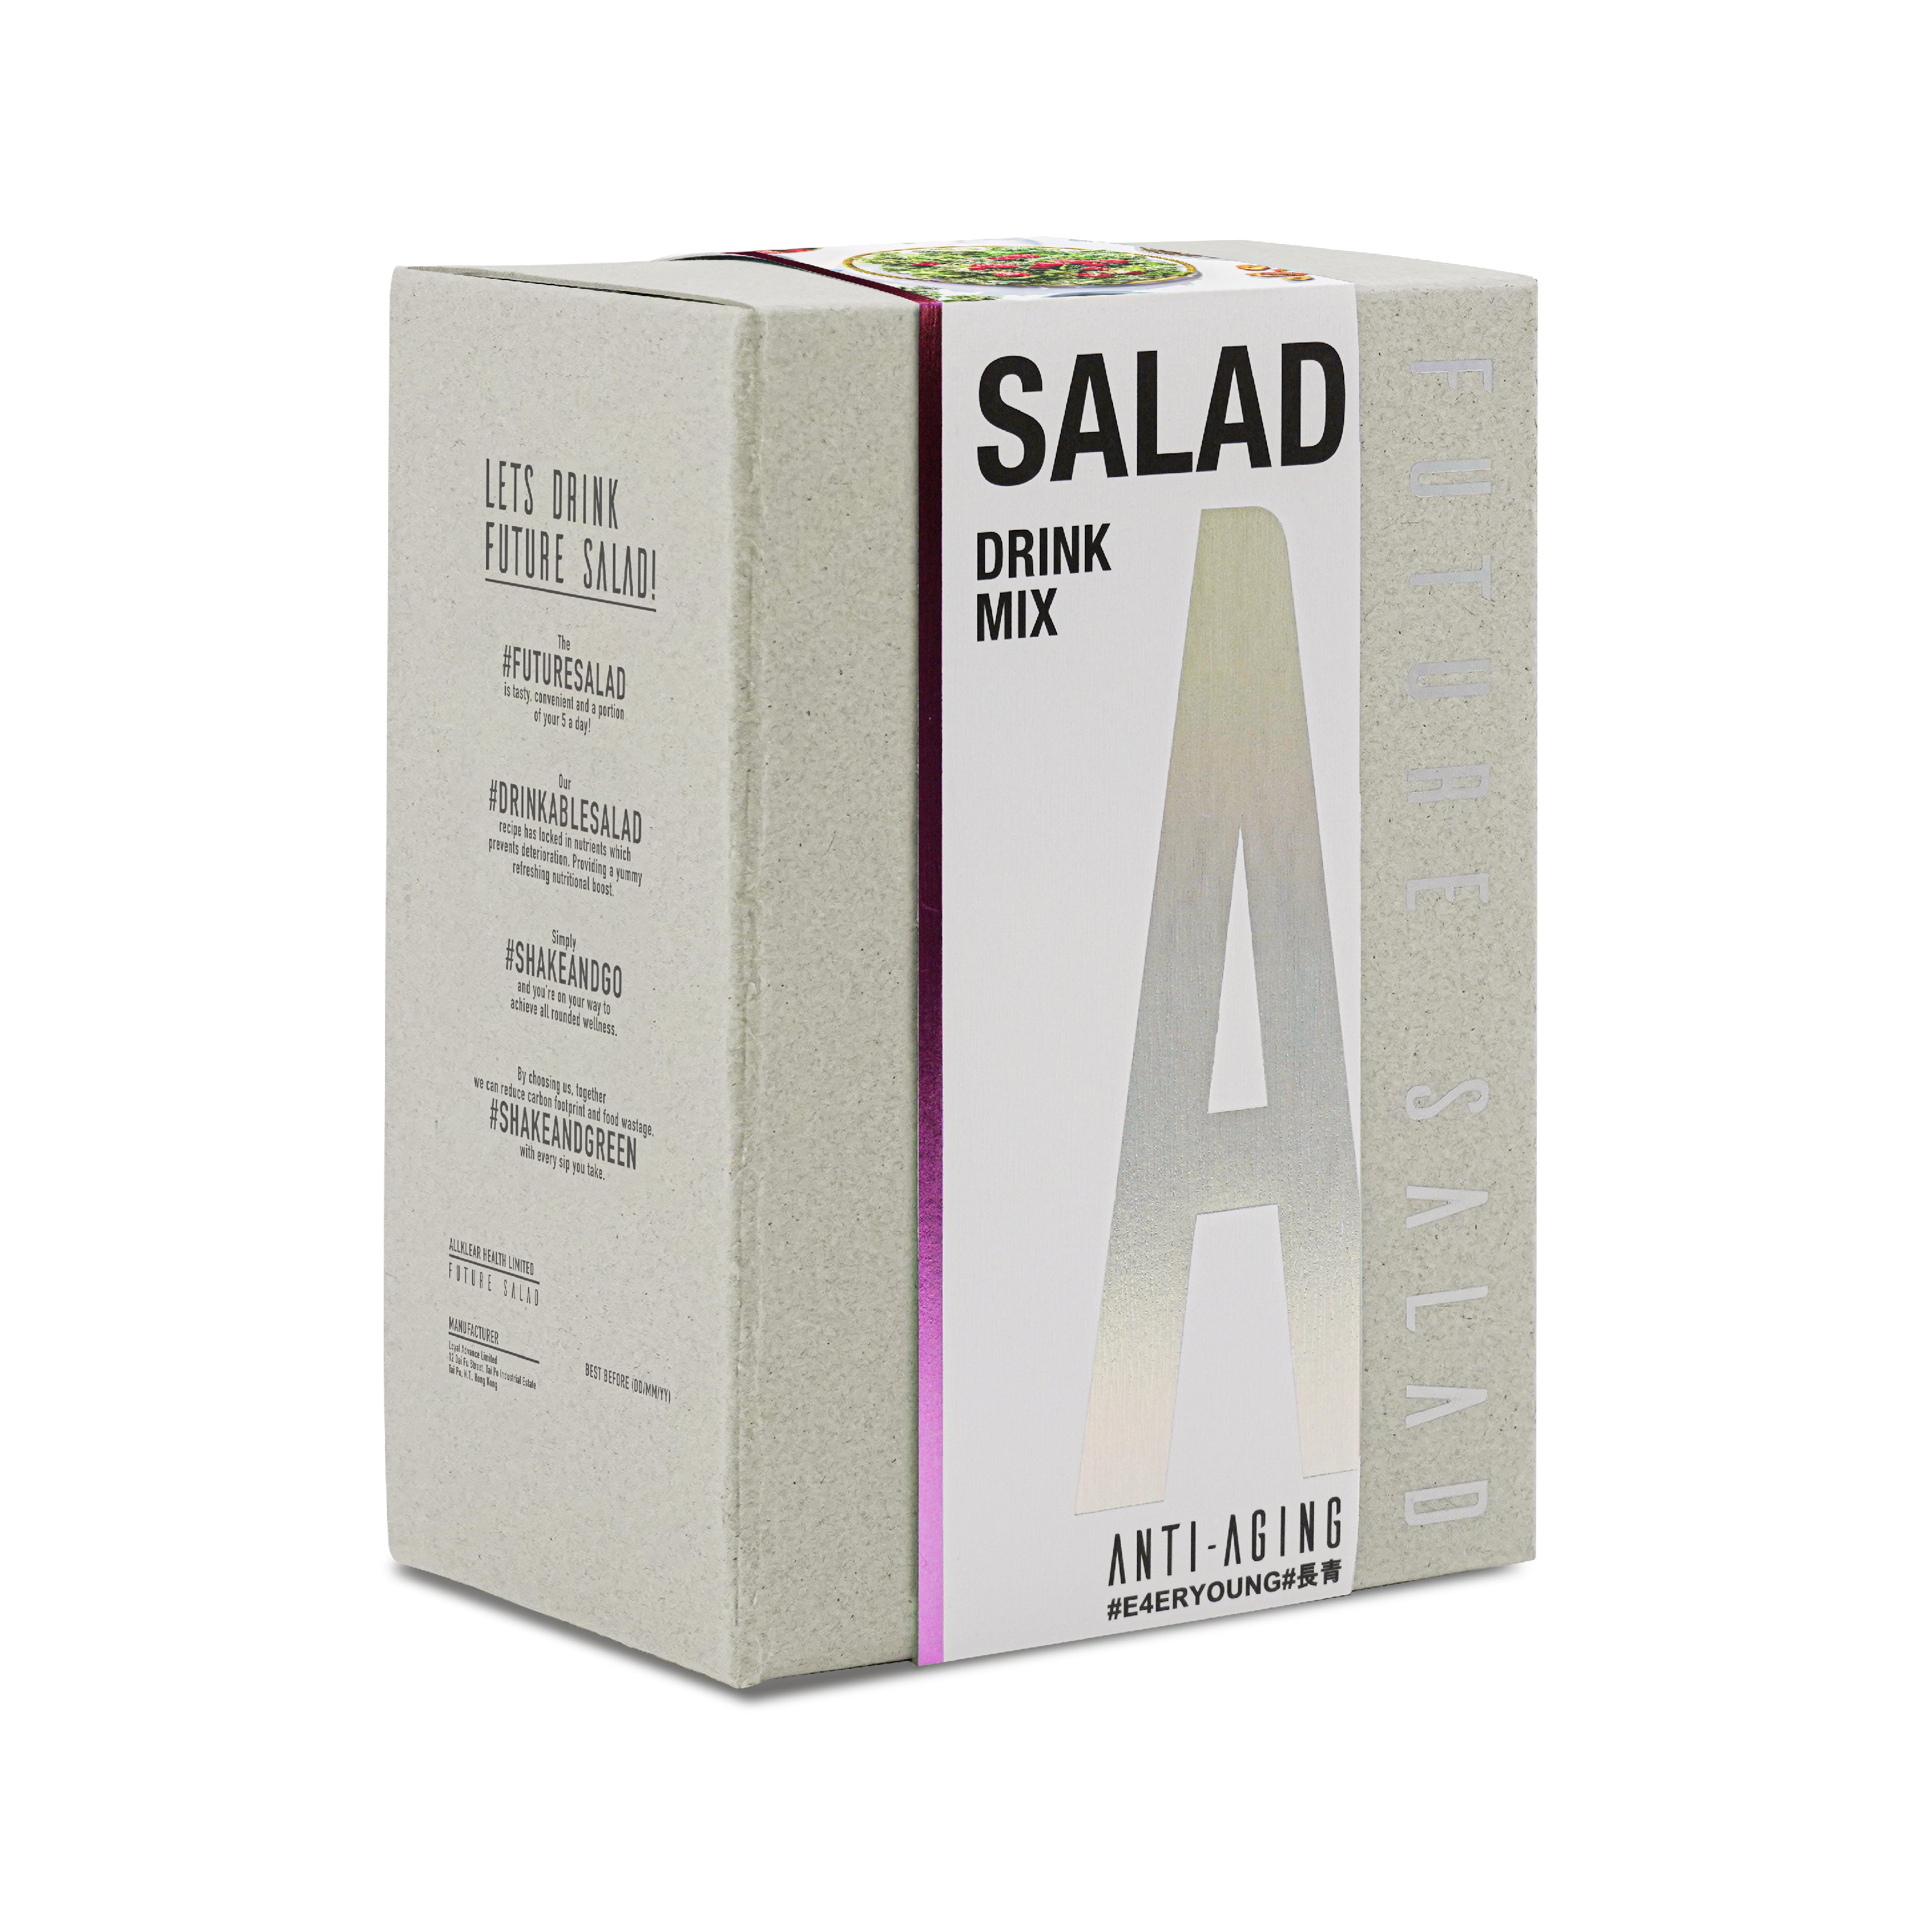 Lets Drink Future Salad | 凍齡新沙律 Anti-Aging Salad Drink Mix 30包裝 | Future Salad